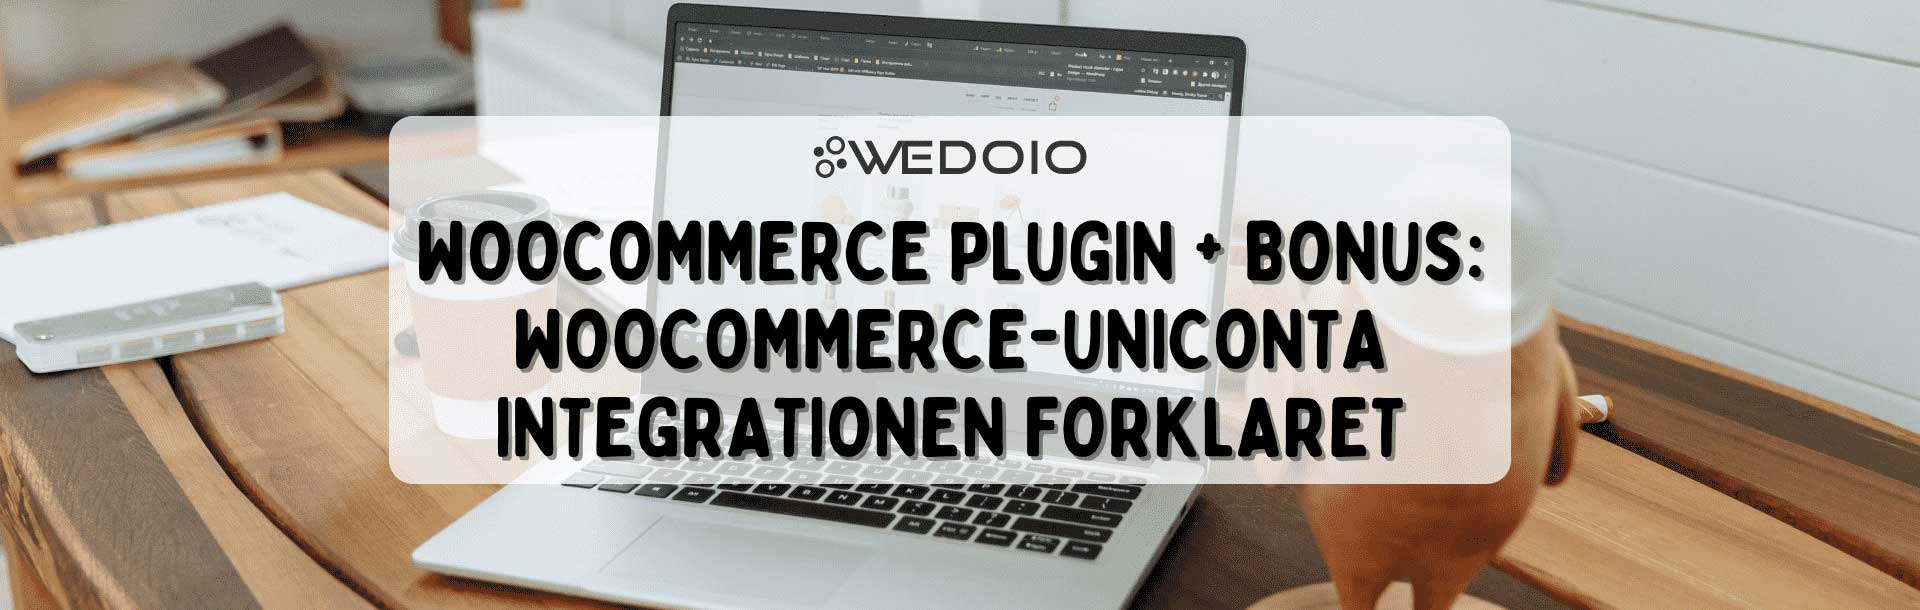 WooCommerce Plugin+Bonus: WooCommerce-Uniconta Integrationen forklaret